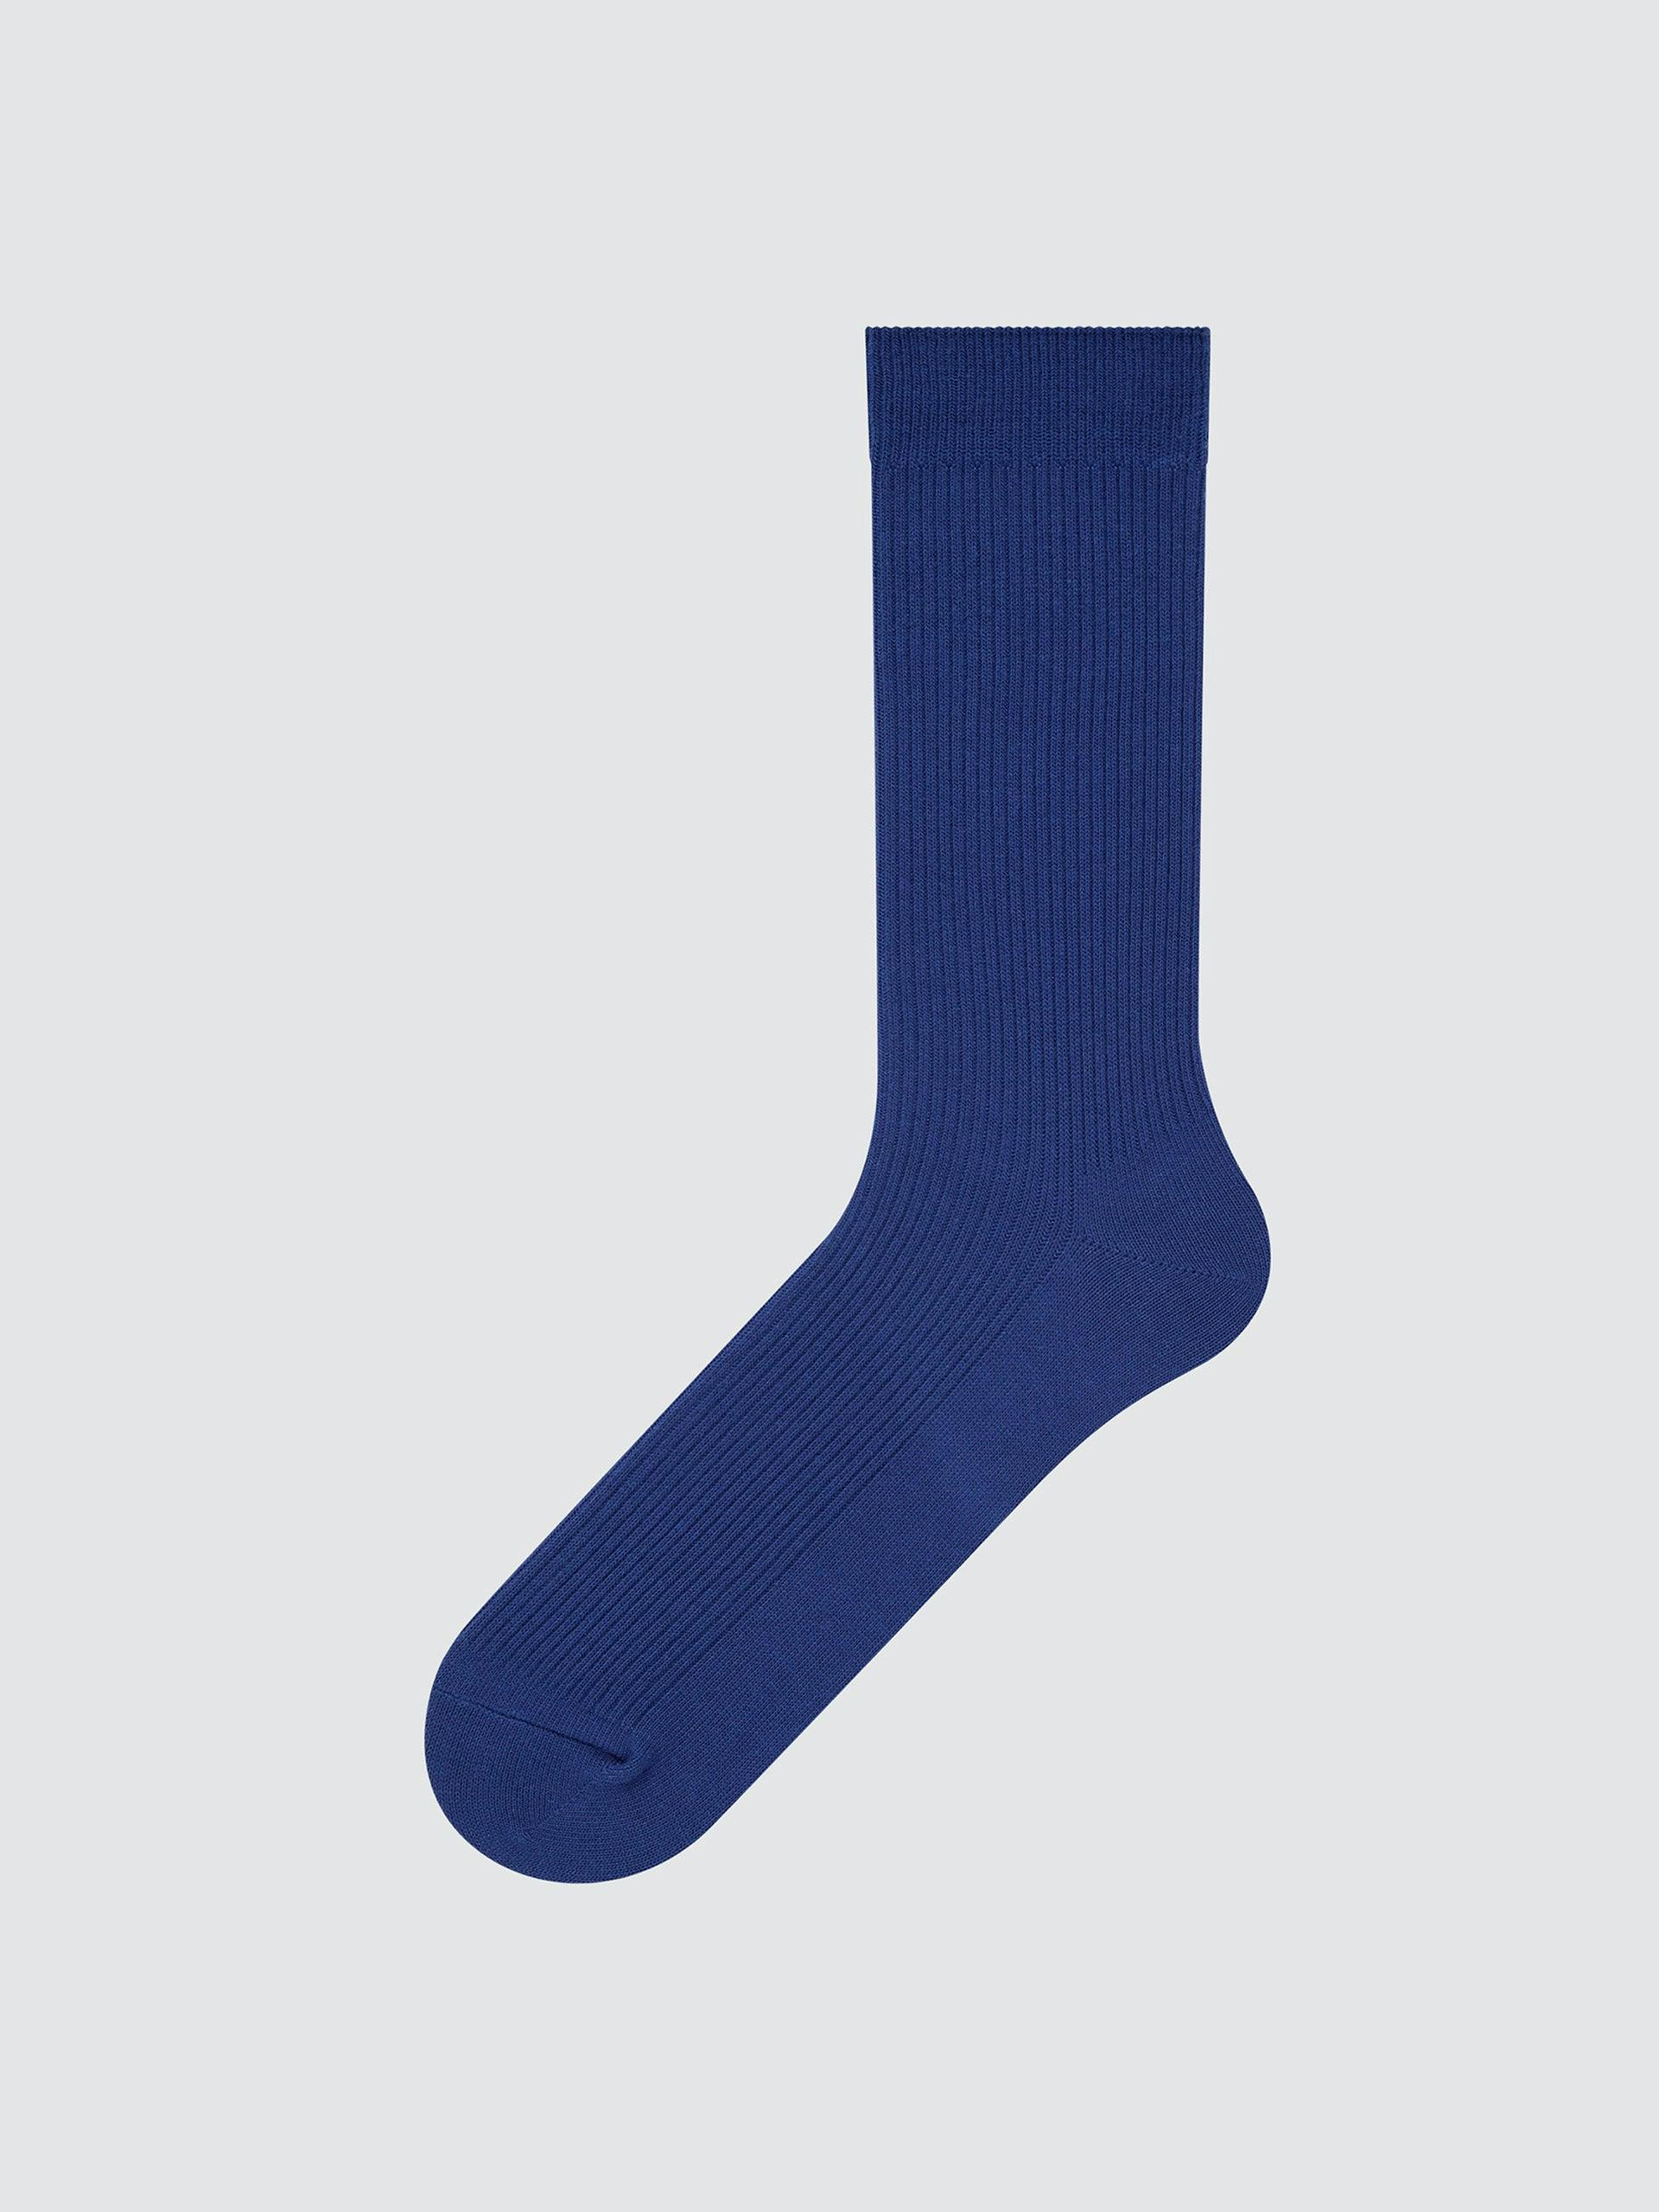 Colour socks in blue